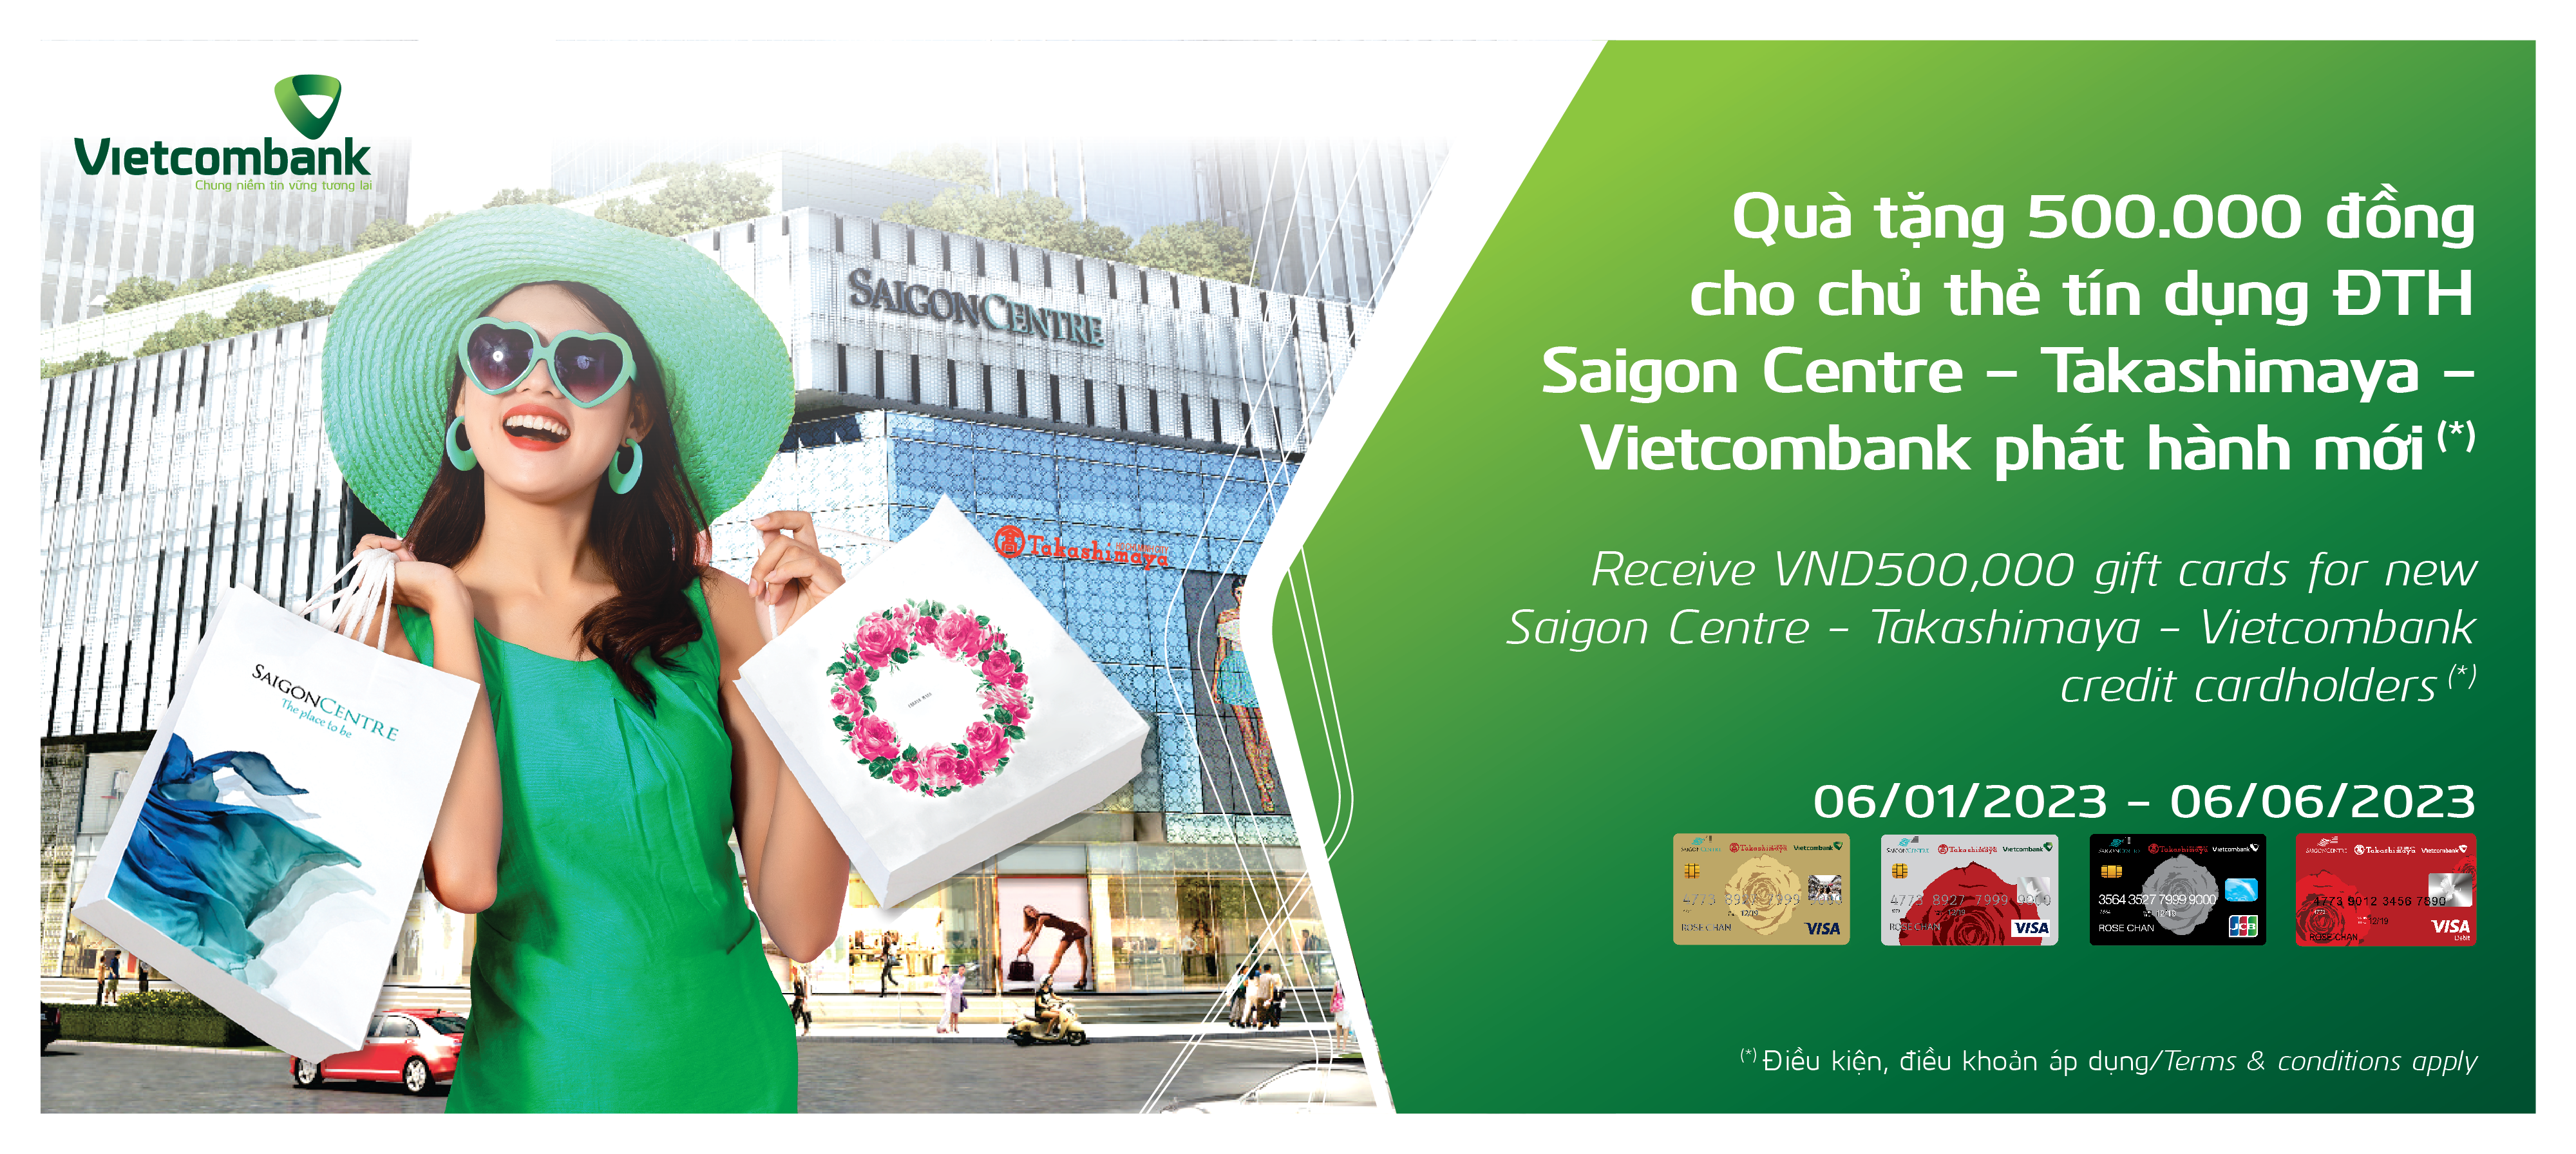 RECEIVE VND500,000 GIFT CARDS FOR NEW SAIGON CENTRE - TAKASHIMAYA - VIETCOMBANK CARDHOLDERS